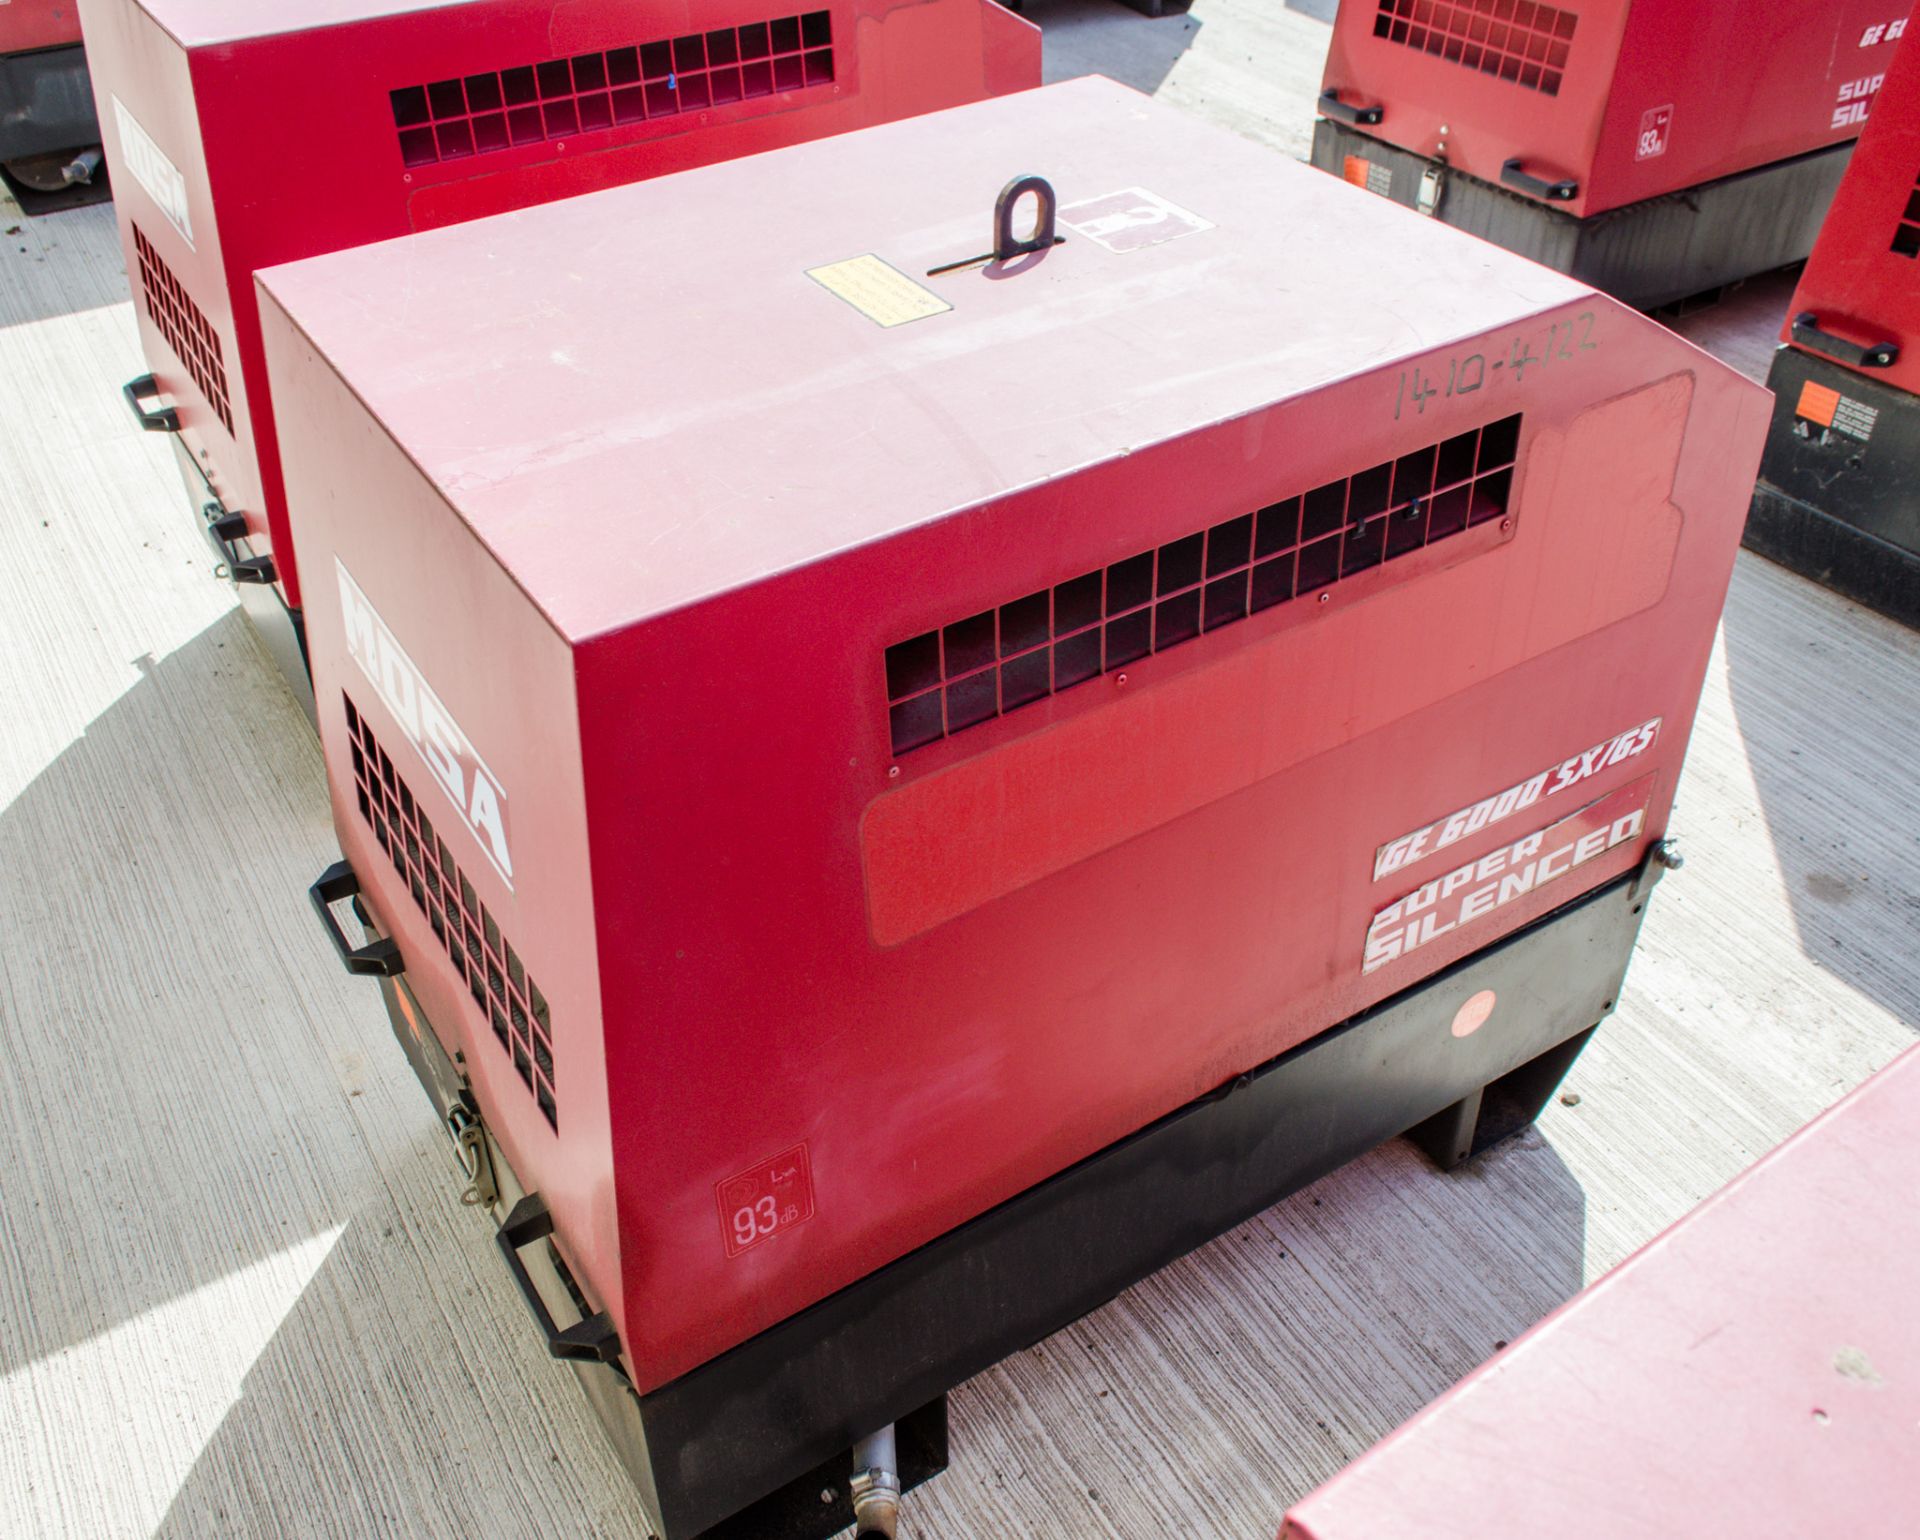 Mosa GE6000 SX/GS diesel driven generator Year: 2014 S/N: 036367 1410-4113 - Image 2 of 4